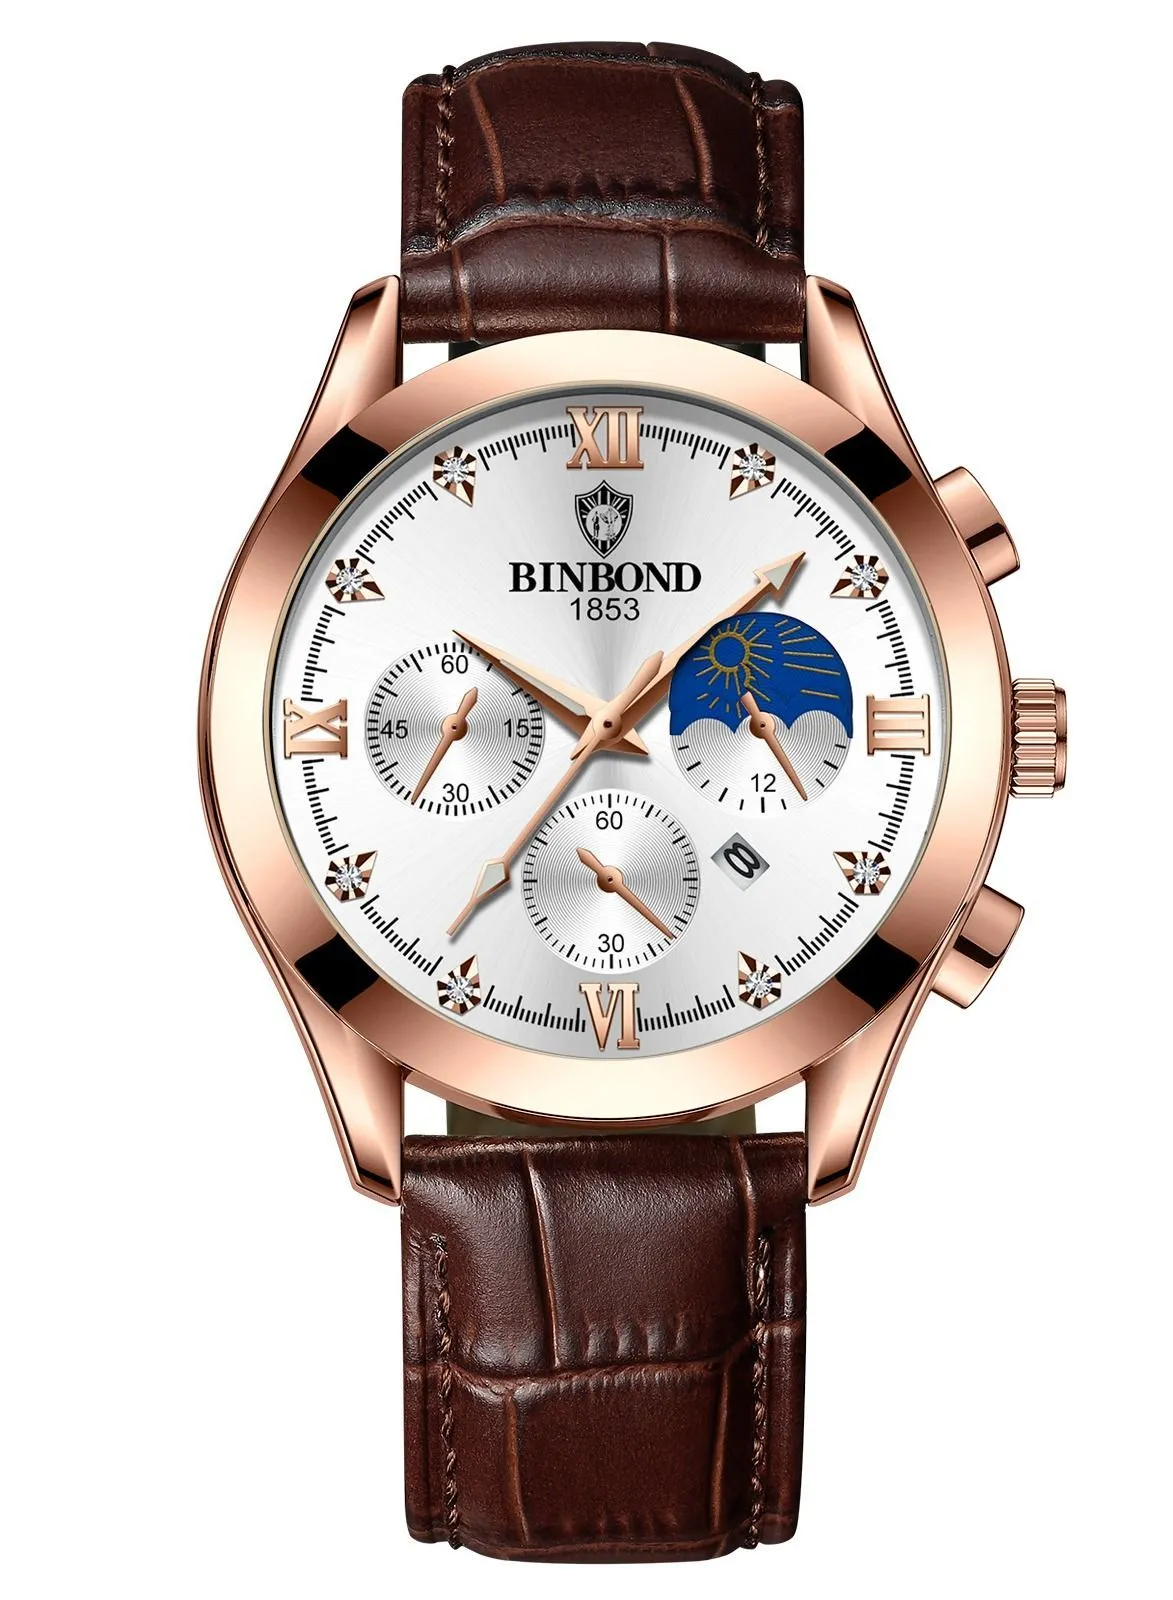 BINBOND Men's sports analog watch + Leather watch strap